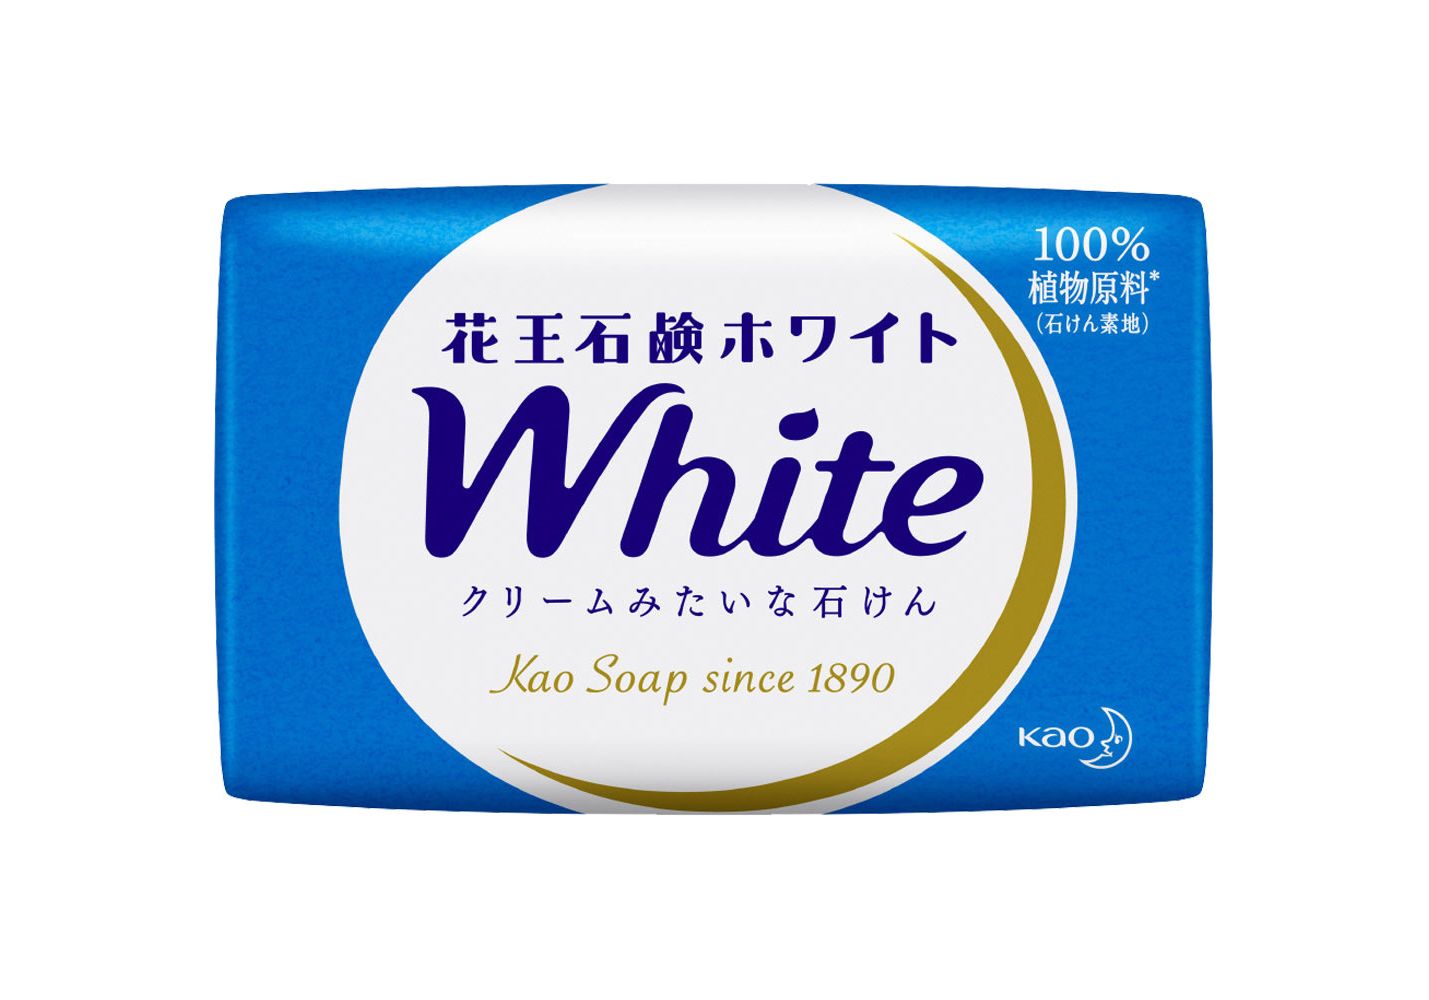 Увлажняющее крем-мыло для тела MegRhythm KAO White с ароматом белых цветов, 85г х 6шт. beauty fox мыло do what you love с ароматом банана 100